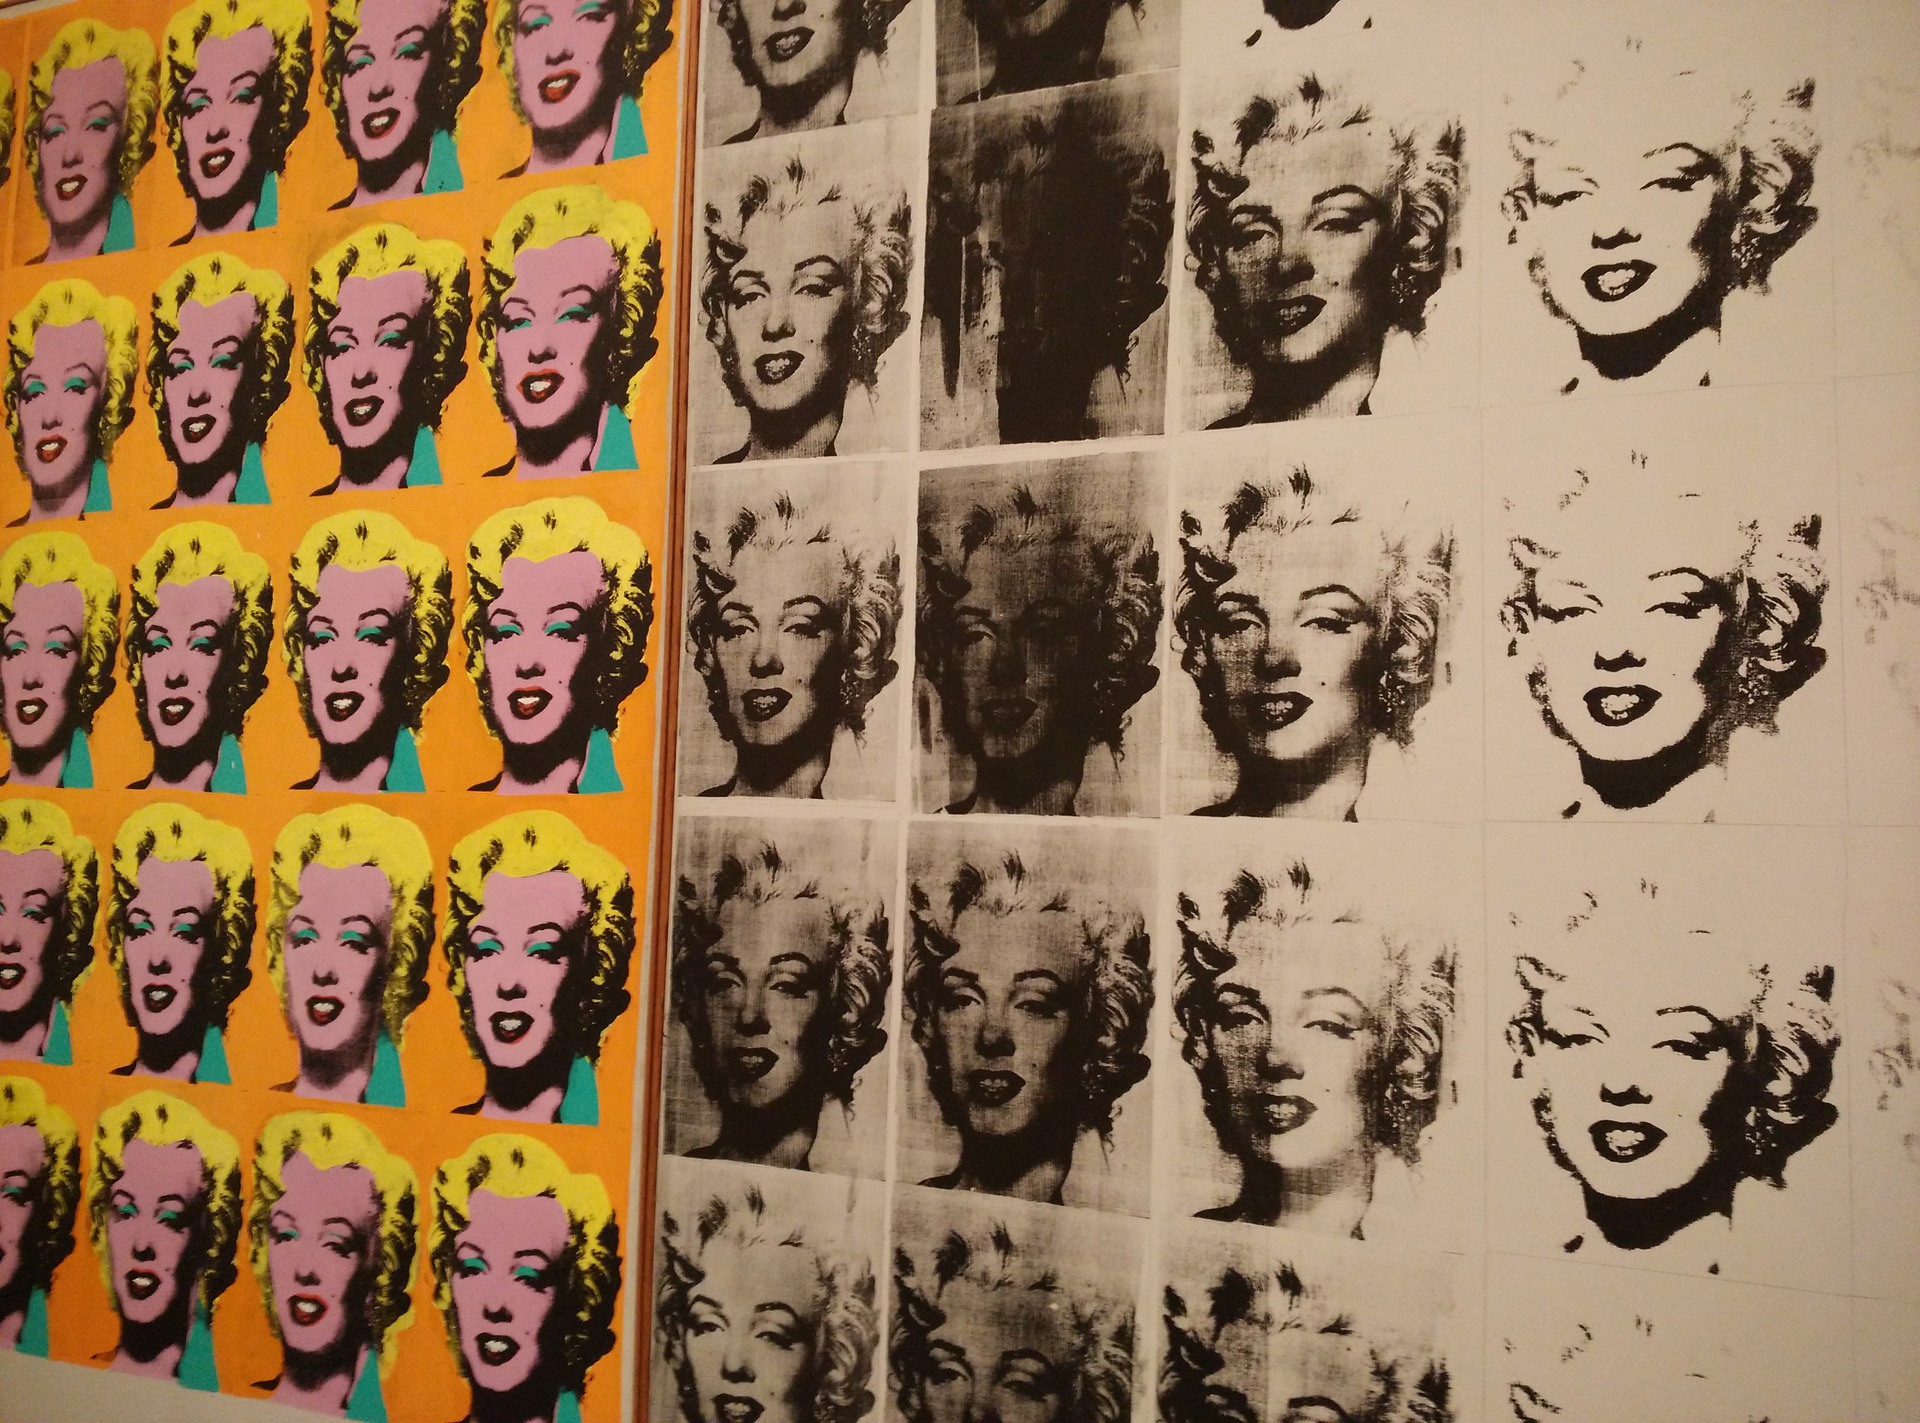 Andy Warhol - Marilyn Monroe screen prints from Pixabay.com https://pixabay.com/en/marilyn-monroe-andy-warhol-art-1318440/